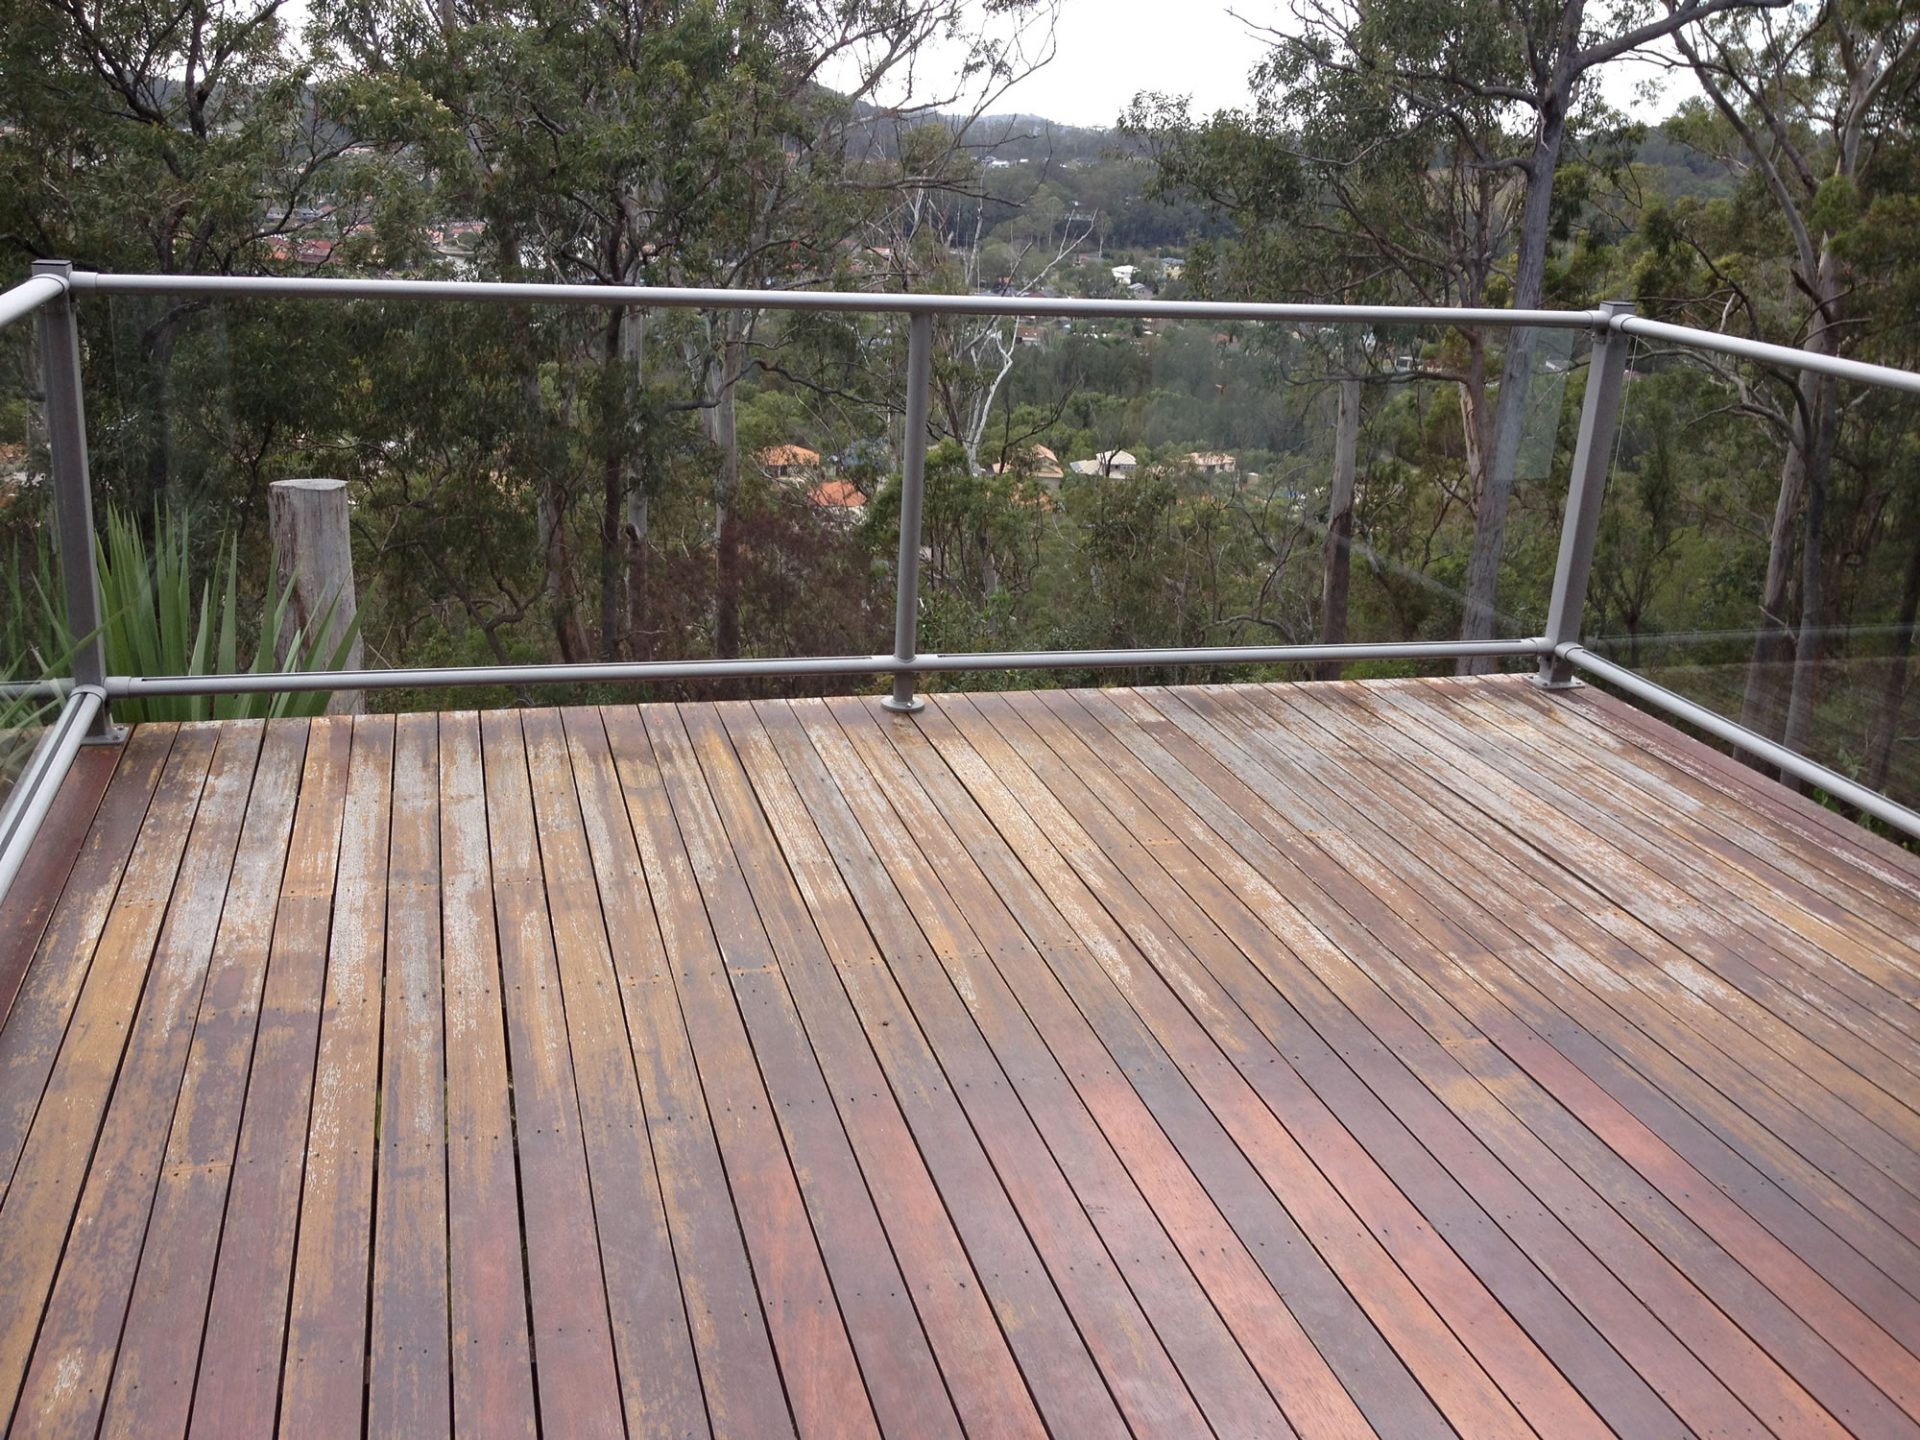 Dark timber deck with weather damage